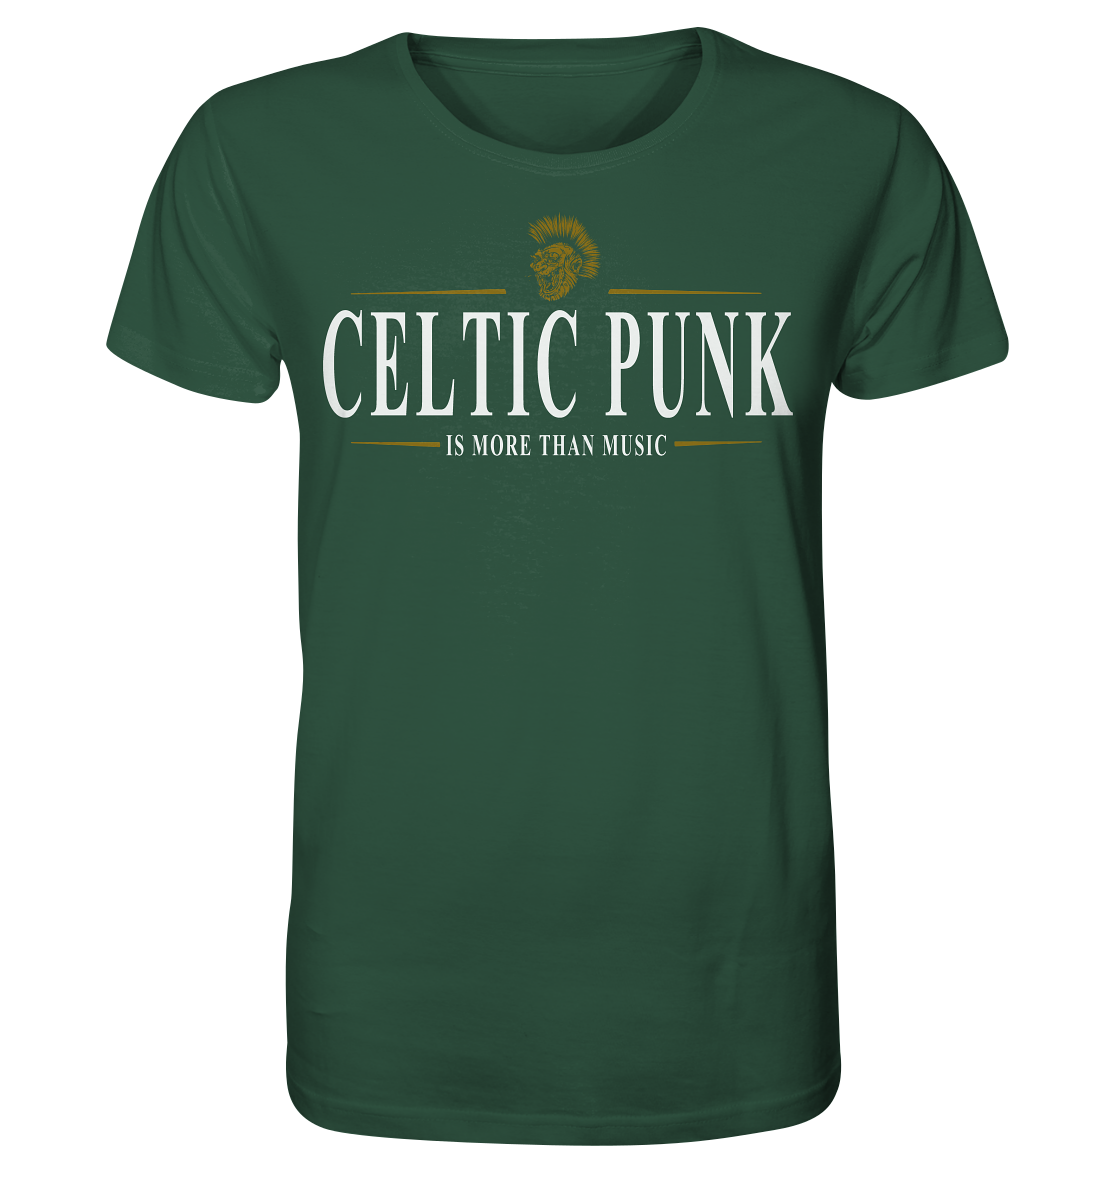 Celtic Punk "Is More Than Music" - Organic Shirt